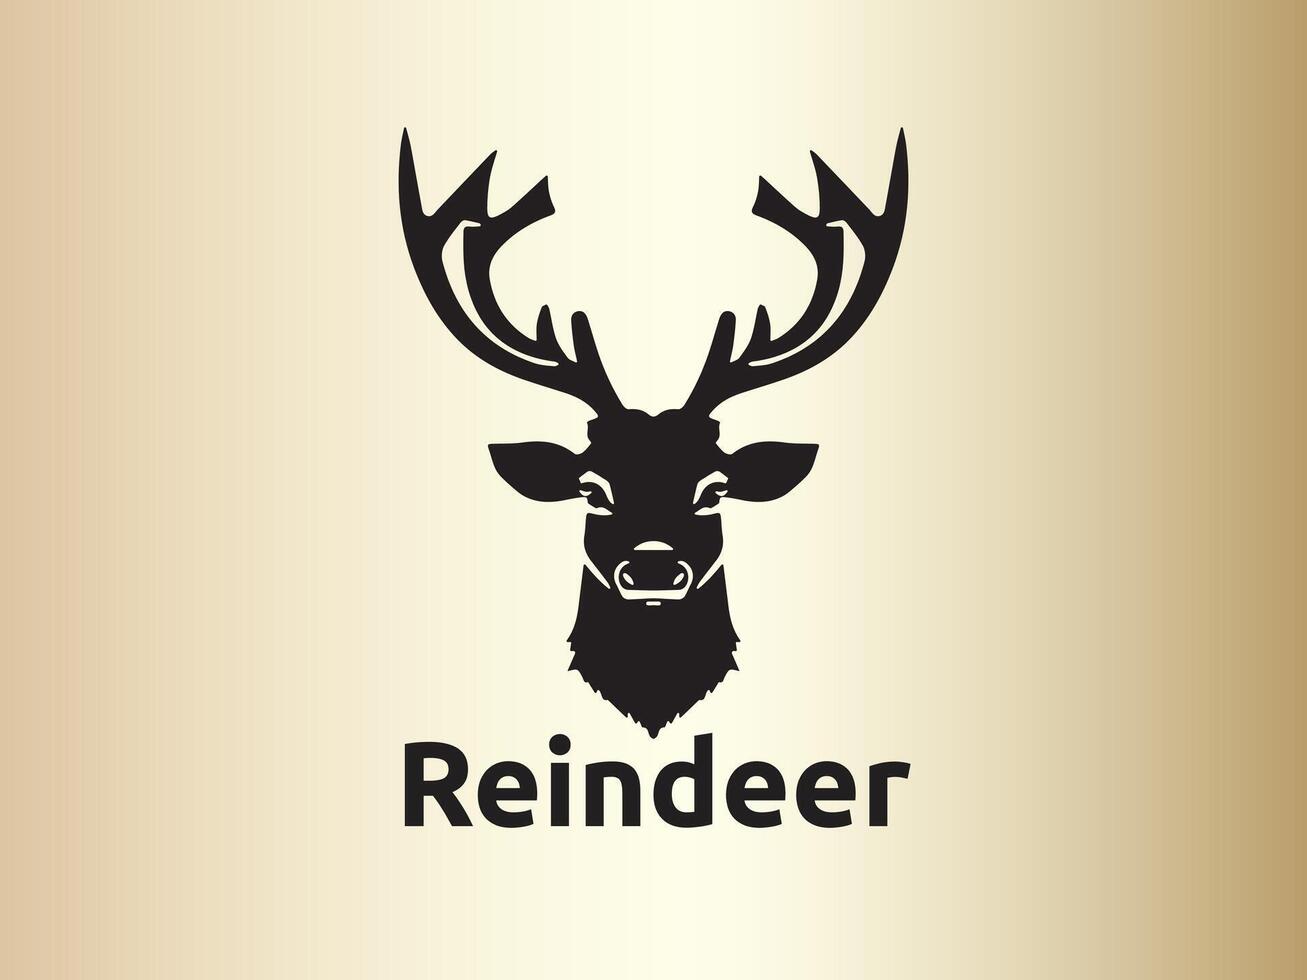 Reindeer logo design vector template. Deer logo design icon